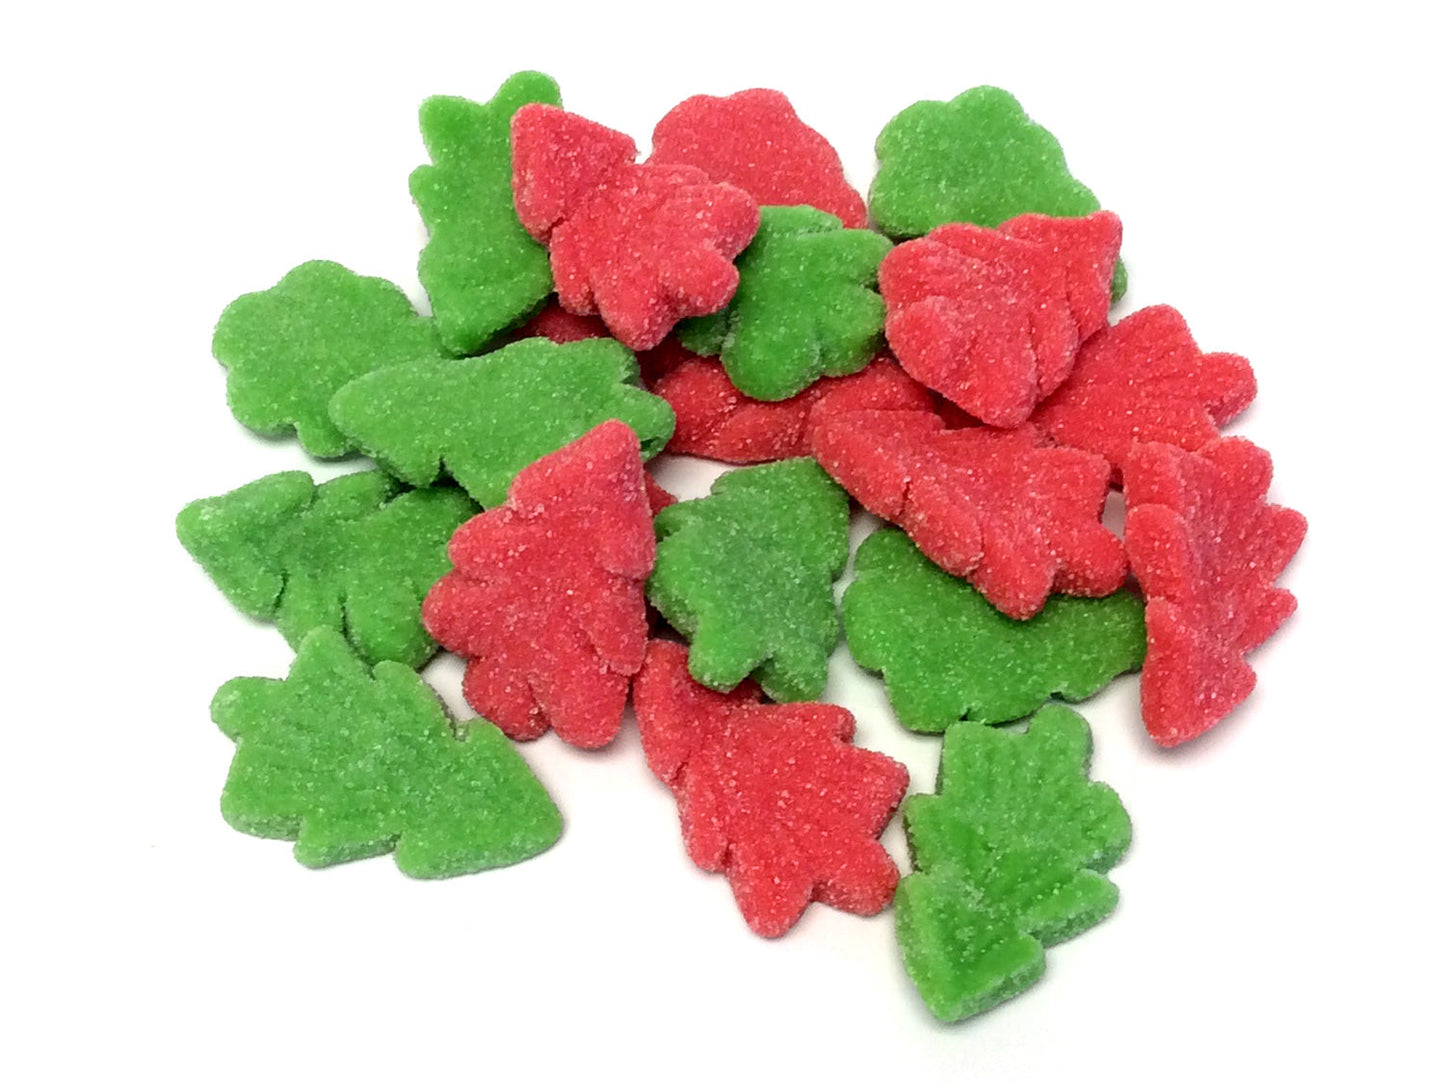 Gummi Christmas Trees - 2 lb bulk bag (137 ct)